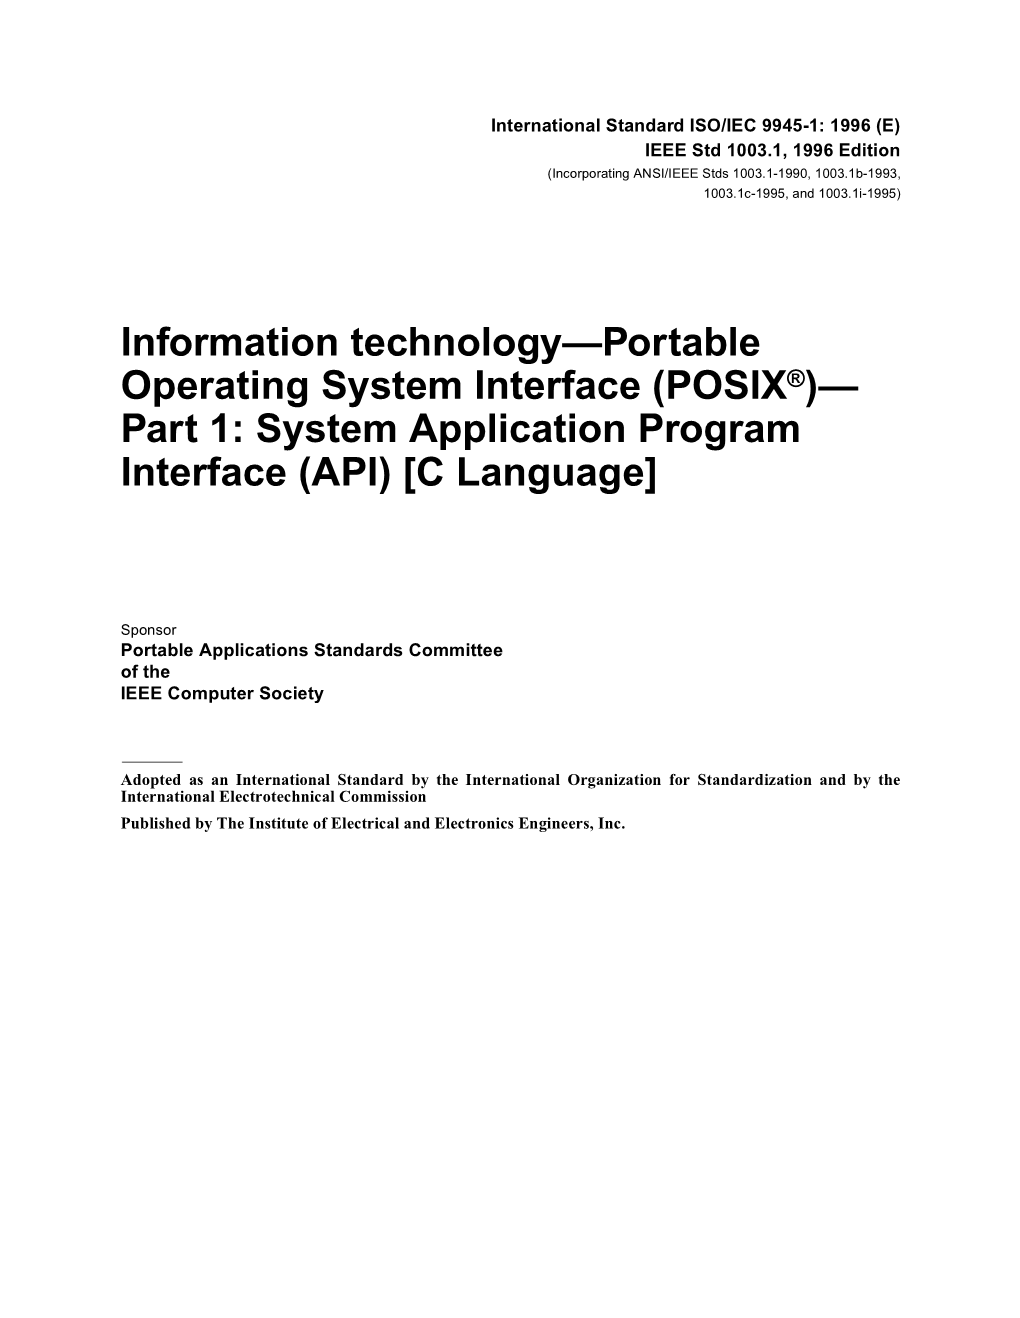 (POSIX®)— Part 1: System Application Program Interface (API) [C Language]